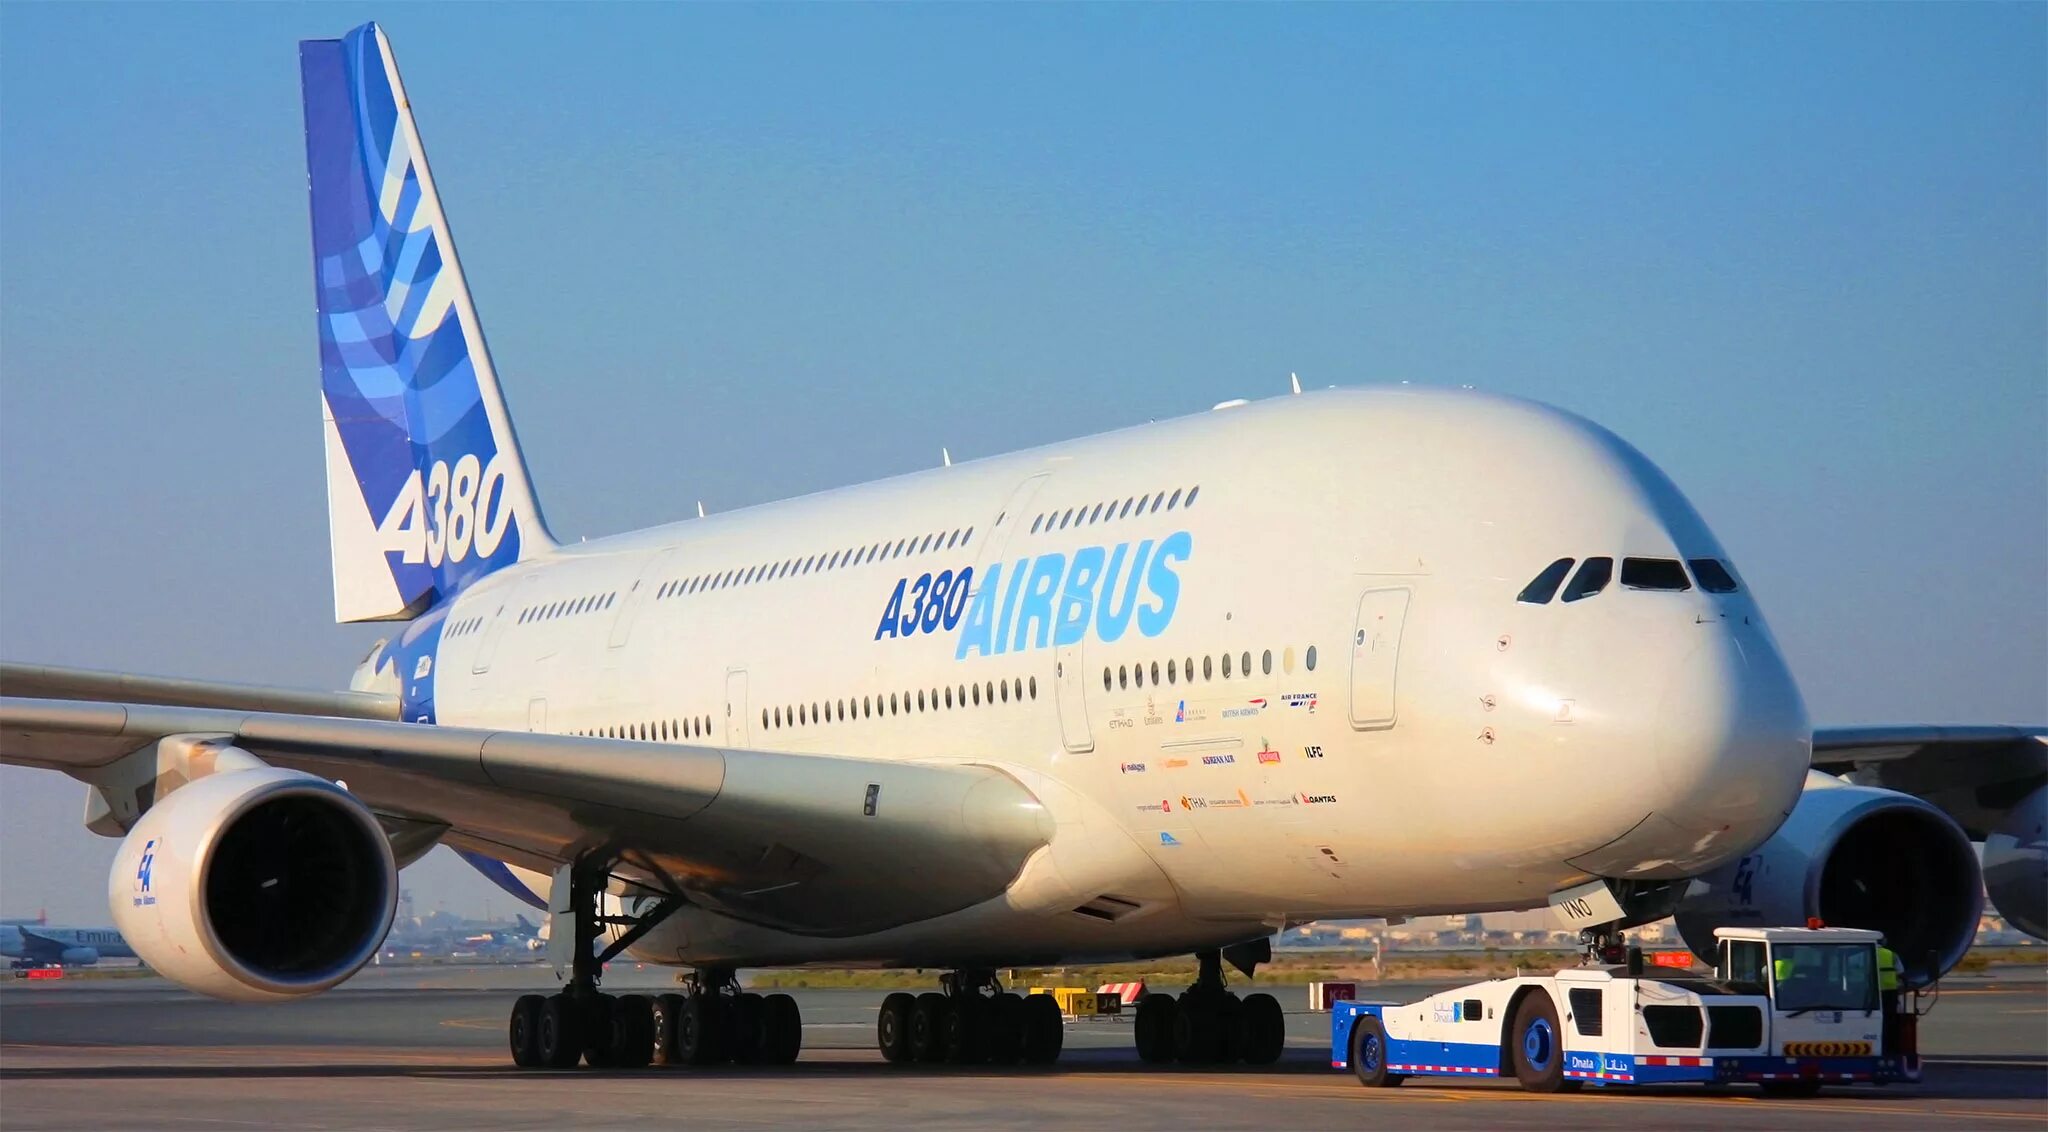 Airbus a380. Самый большой самолет Аэробус 380. Самый большой самолёт пассажирский - Airbus а380. Двухпалубный Airbus a380. Boeing a380.